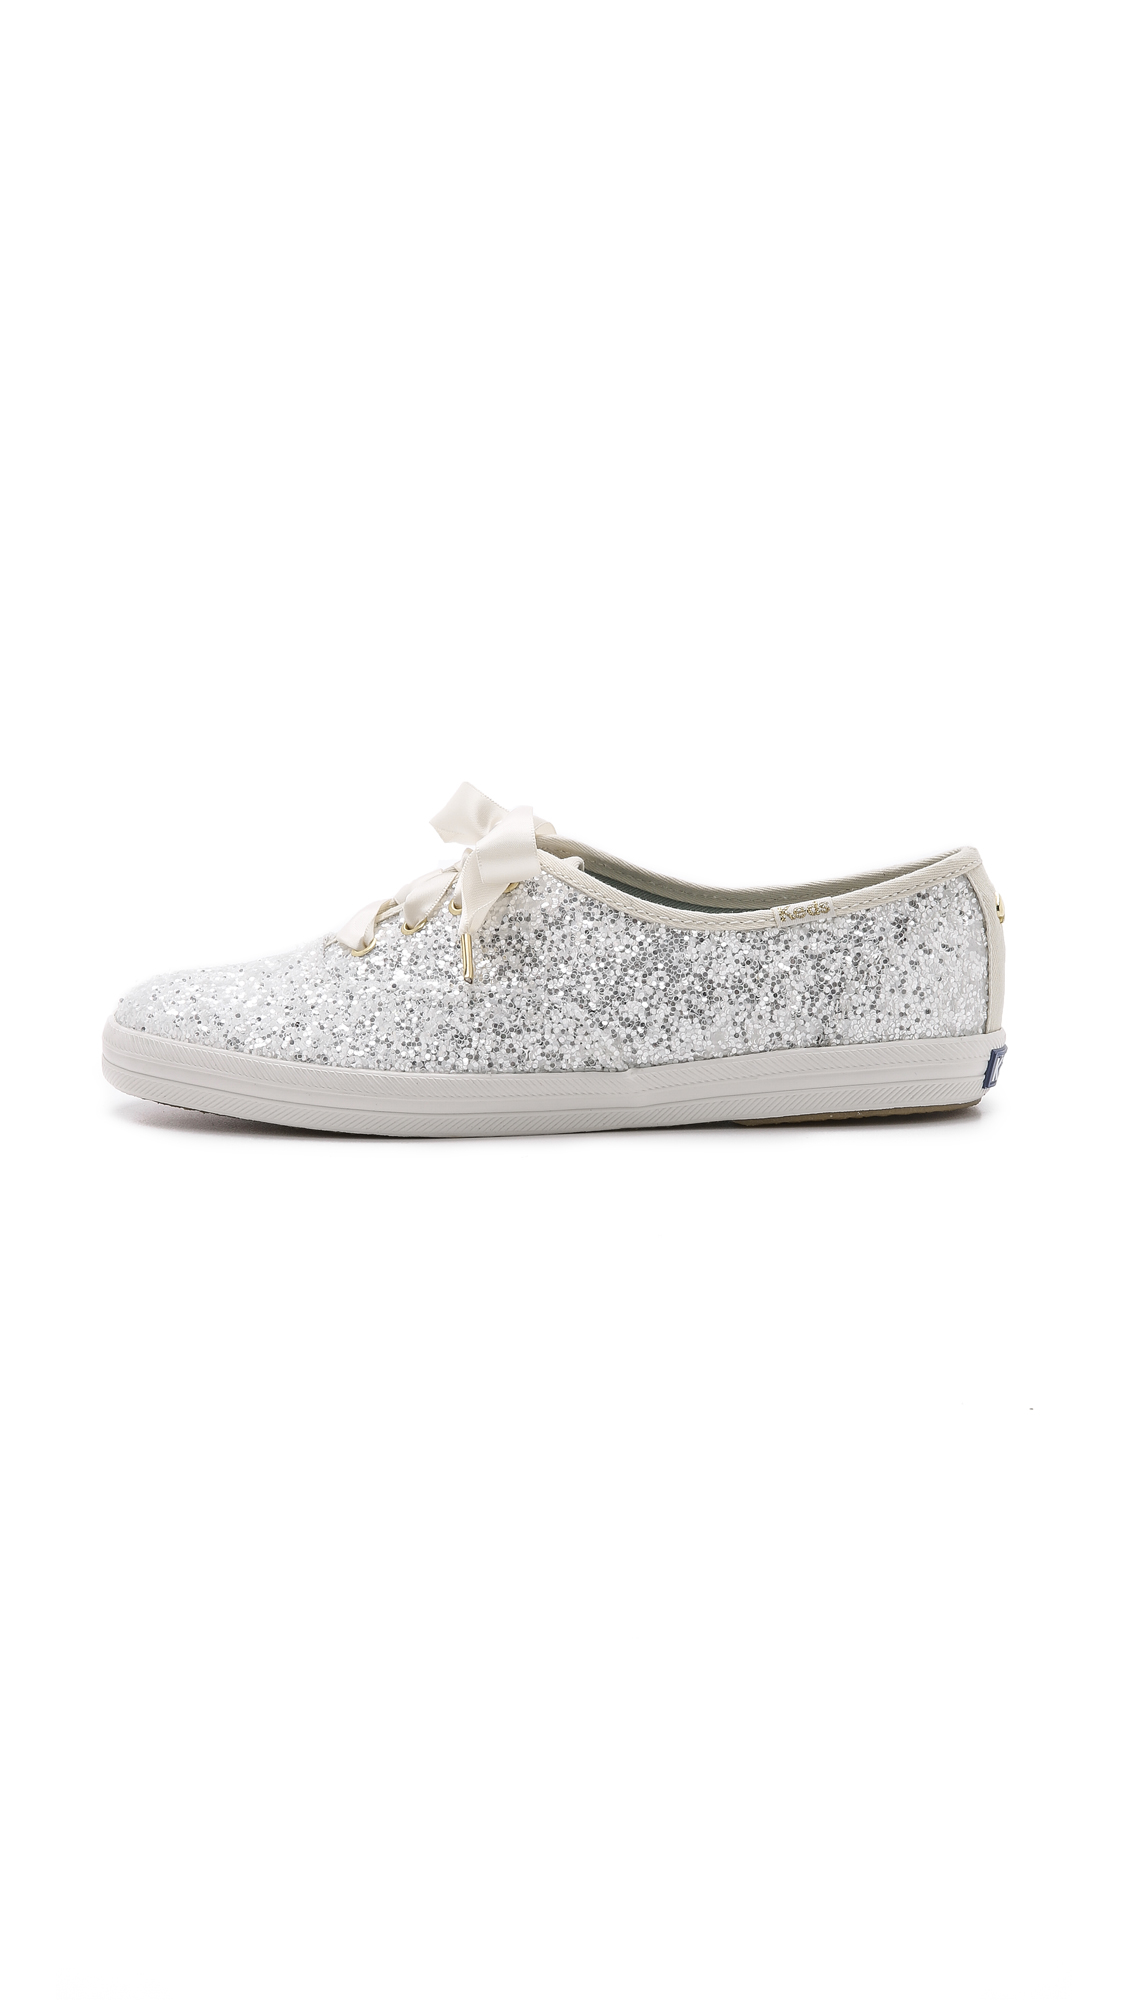 Kate Spade Glitter Keds Sneakers - White | Lyst